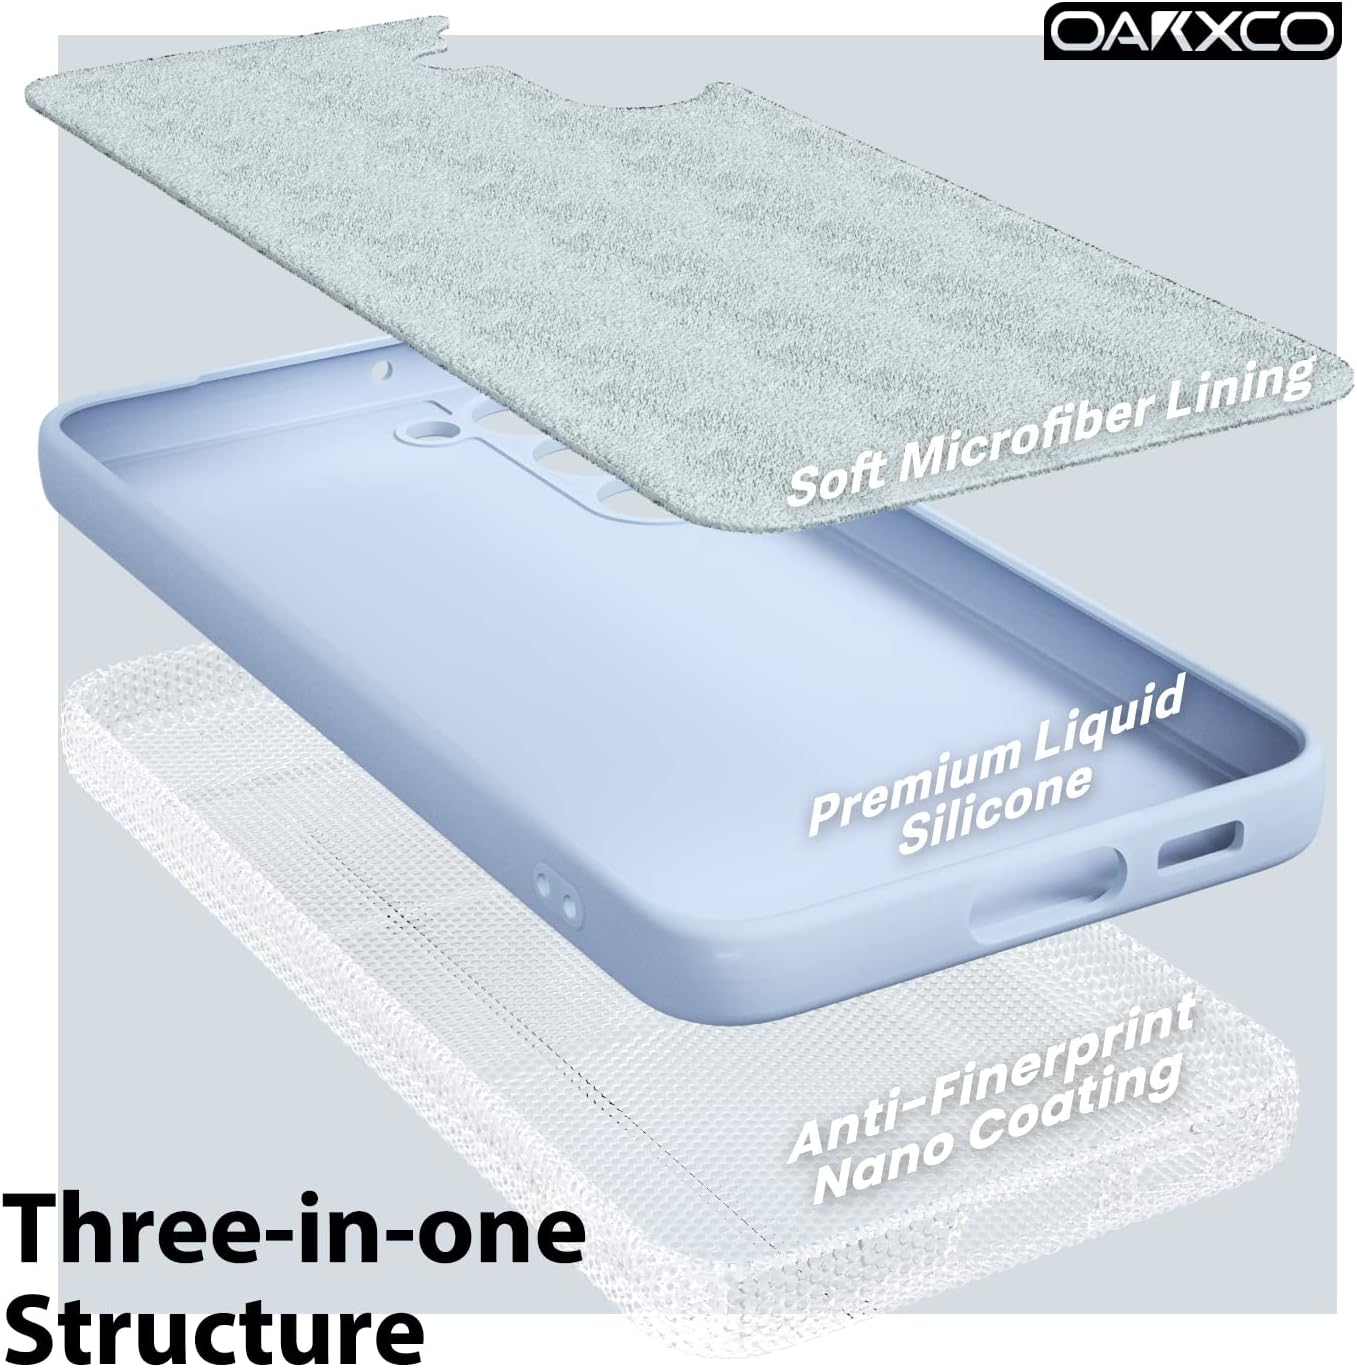 Samsung Galaxy S22 Liquid Silicon Case With Logo- Blue